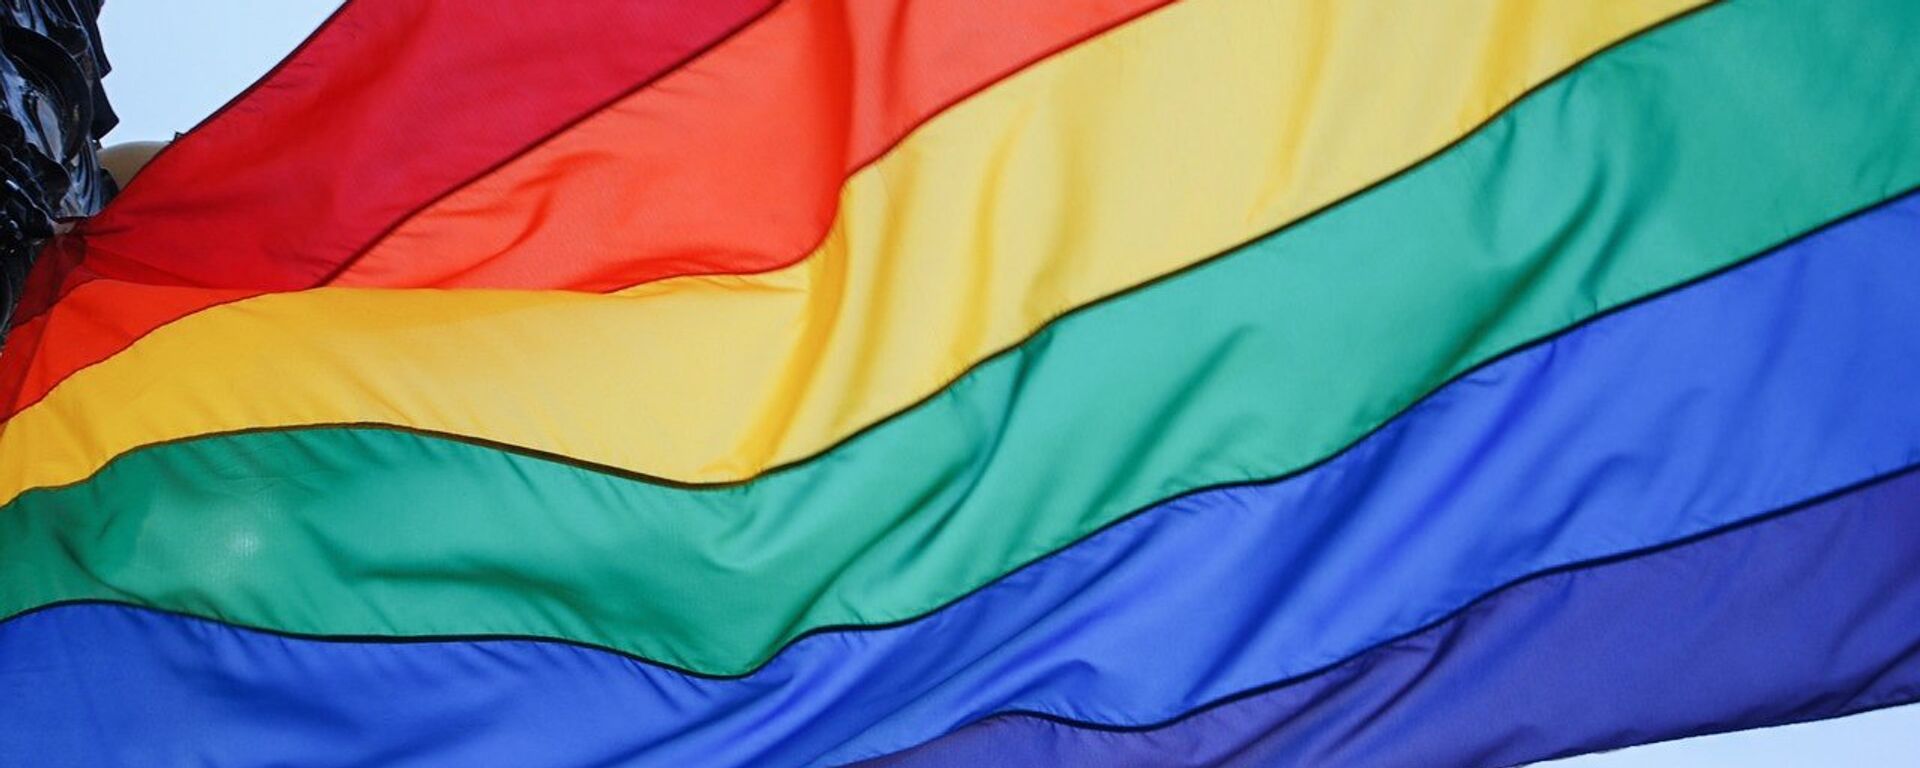 Bandera arcoíris, símbolo del movimiento LGBT - Sputnik Mundo, 1920, 18.12.2020